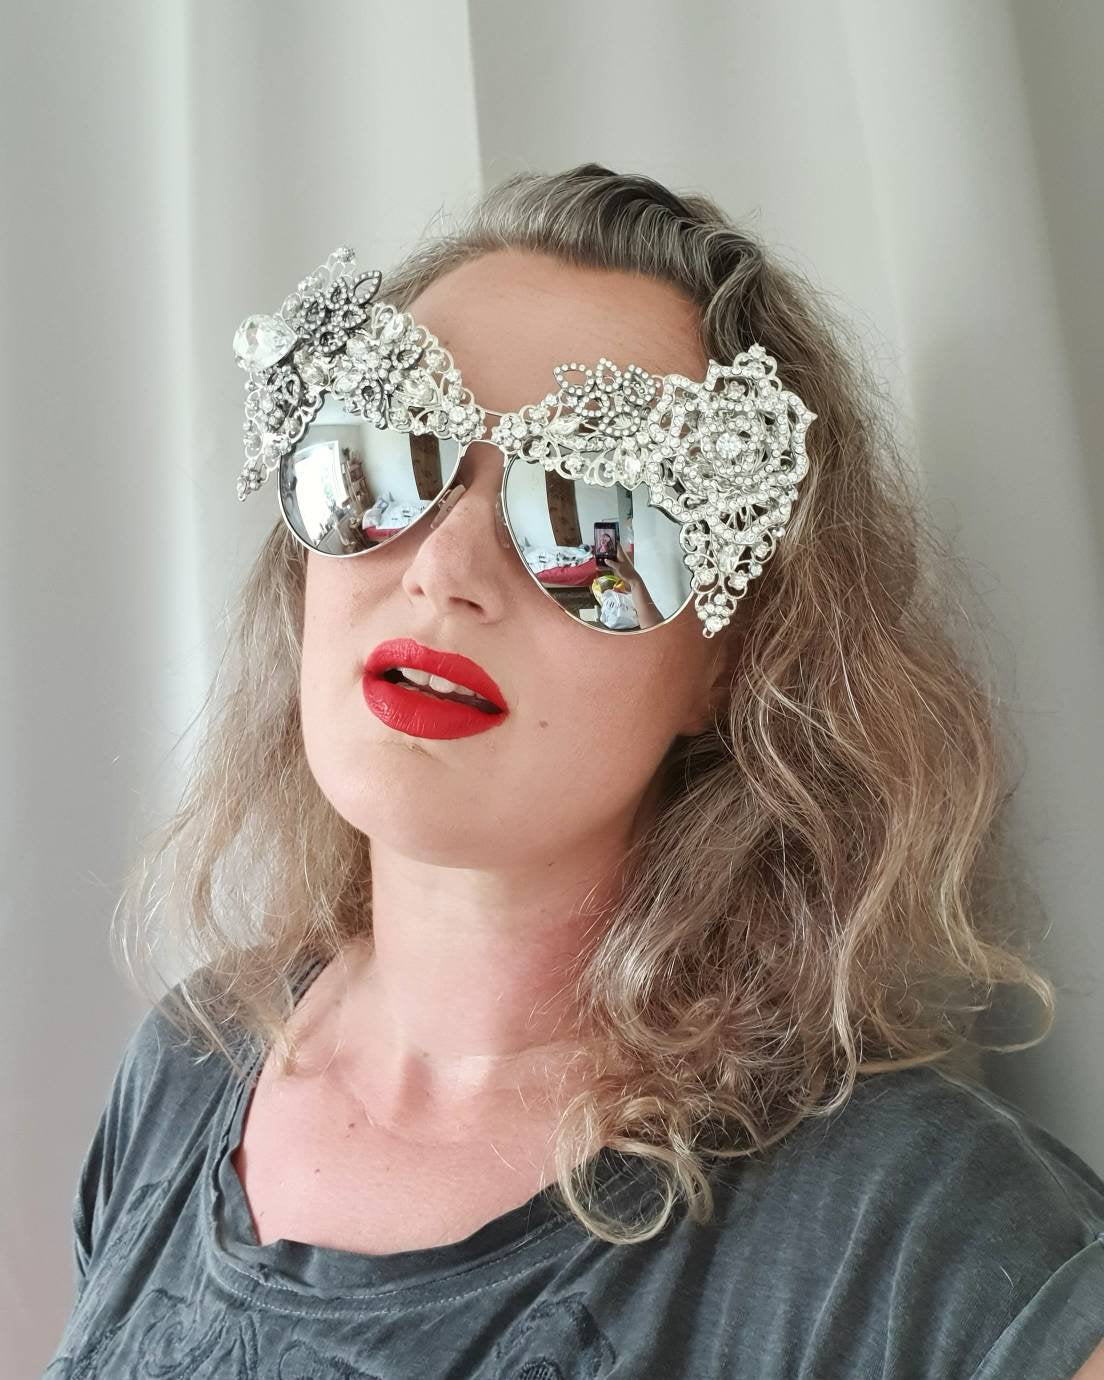 The Crystal Monarch showpiece sunglasses